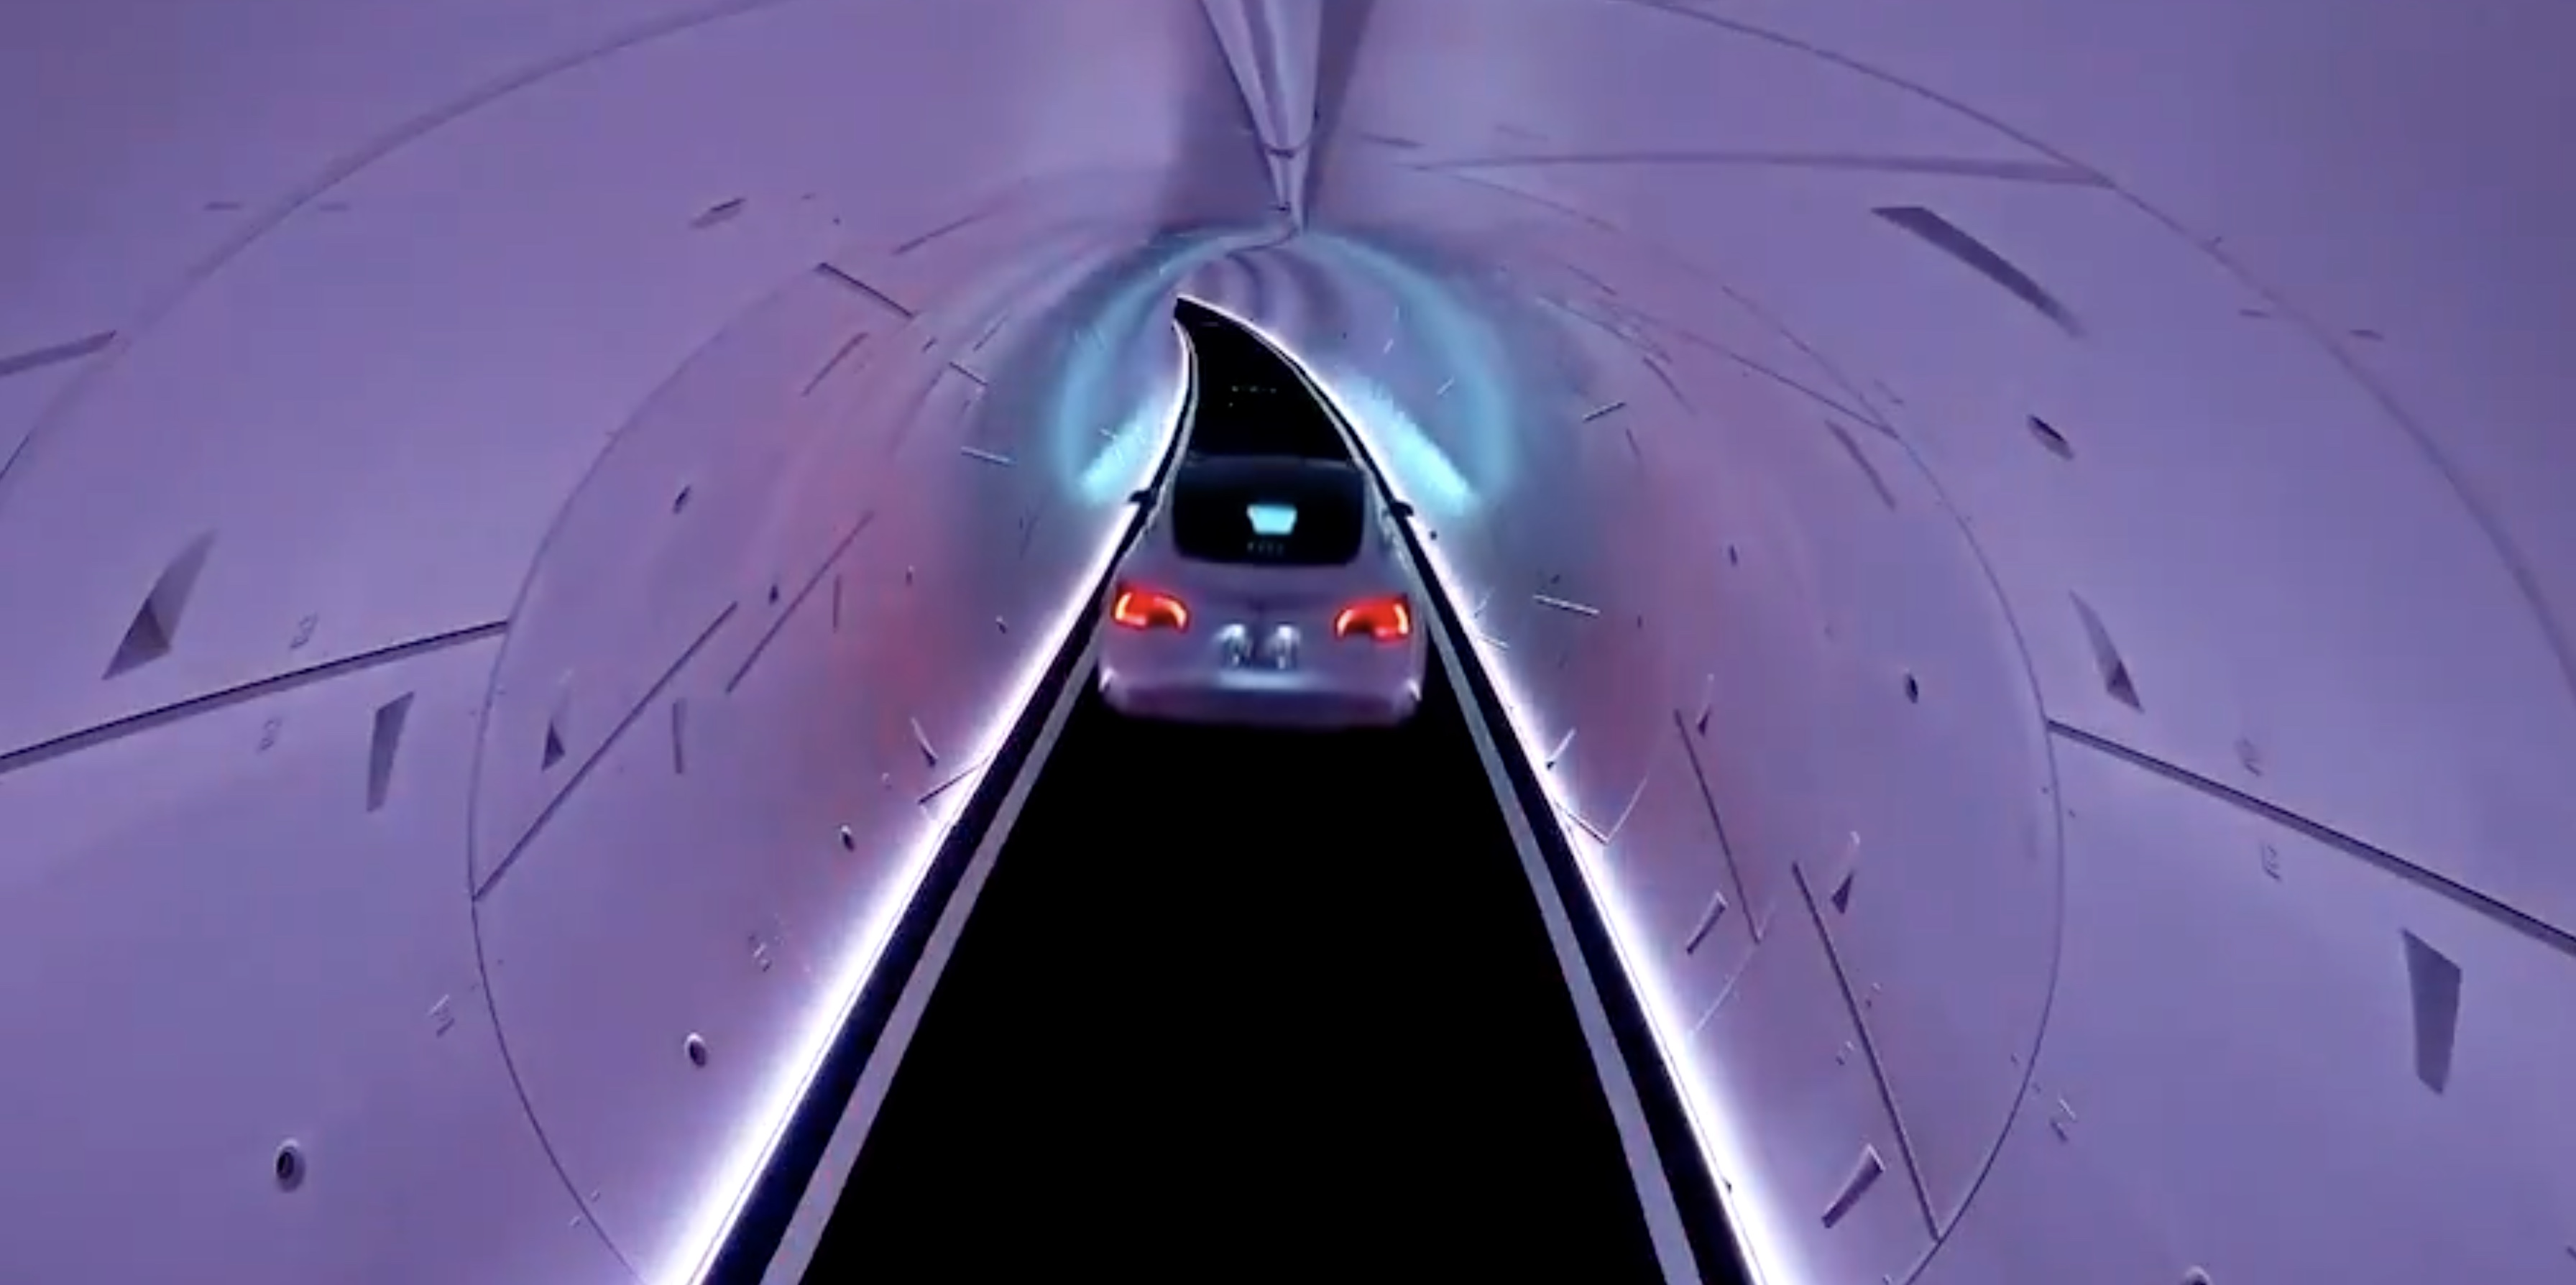 Elon Musk shows off Boring Company's Las Vegas loop station in rendering -  CNET